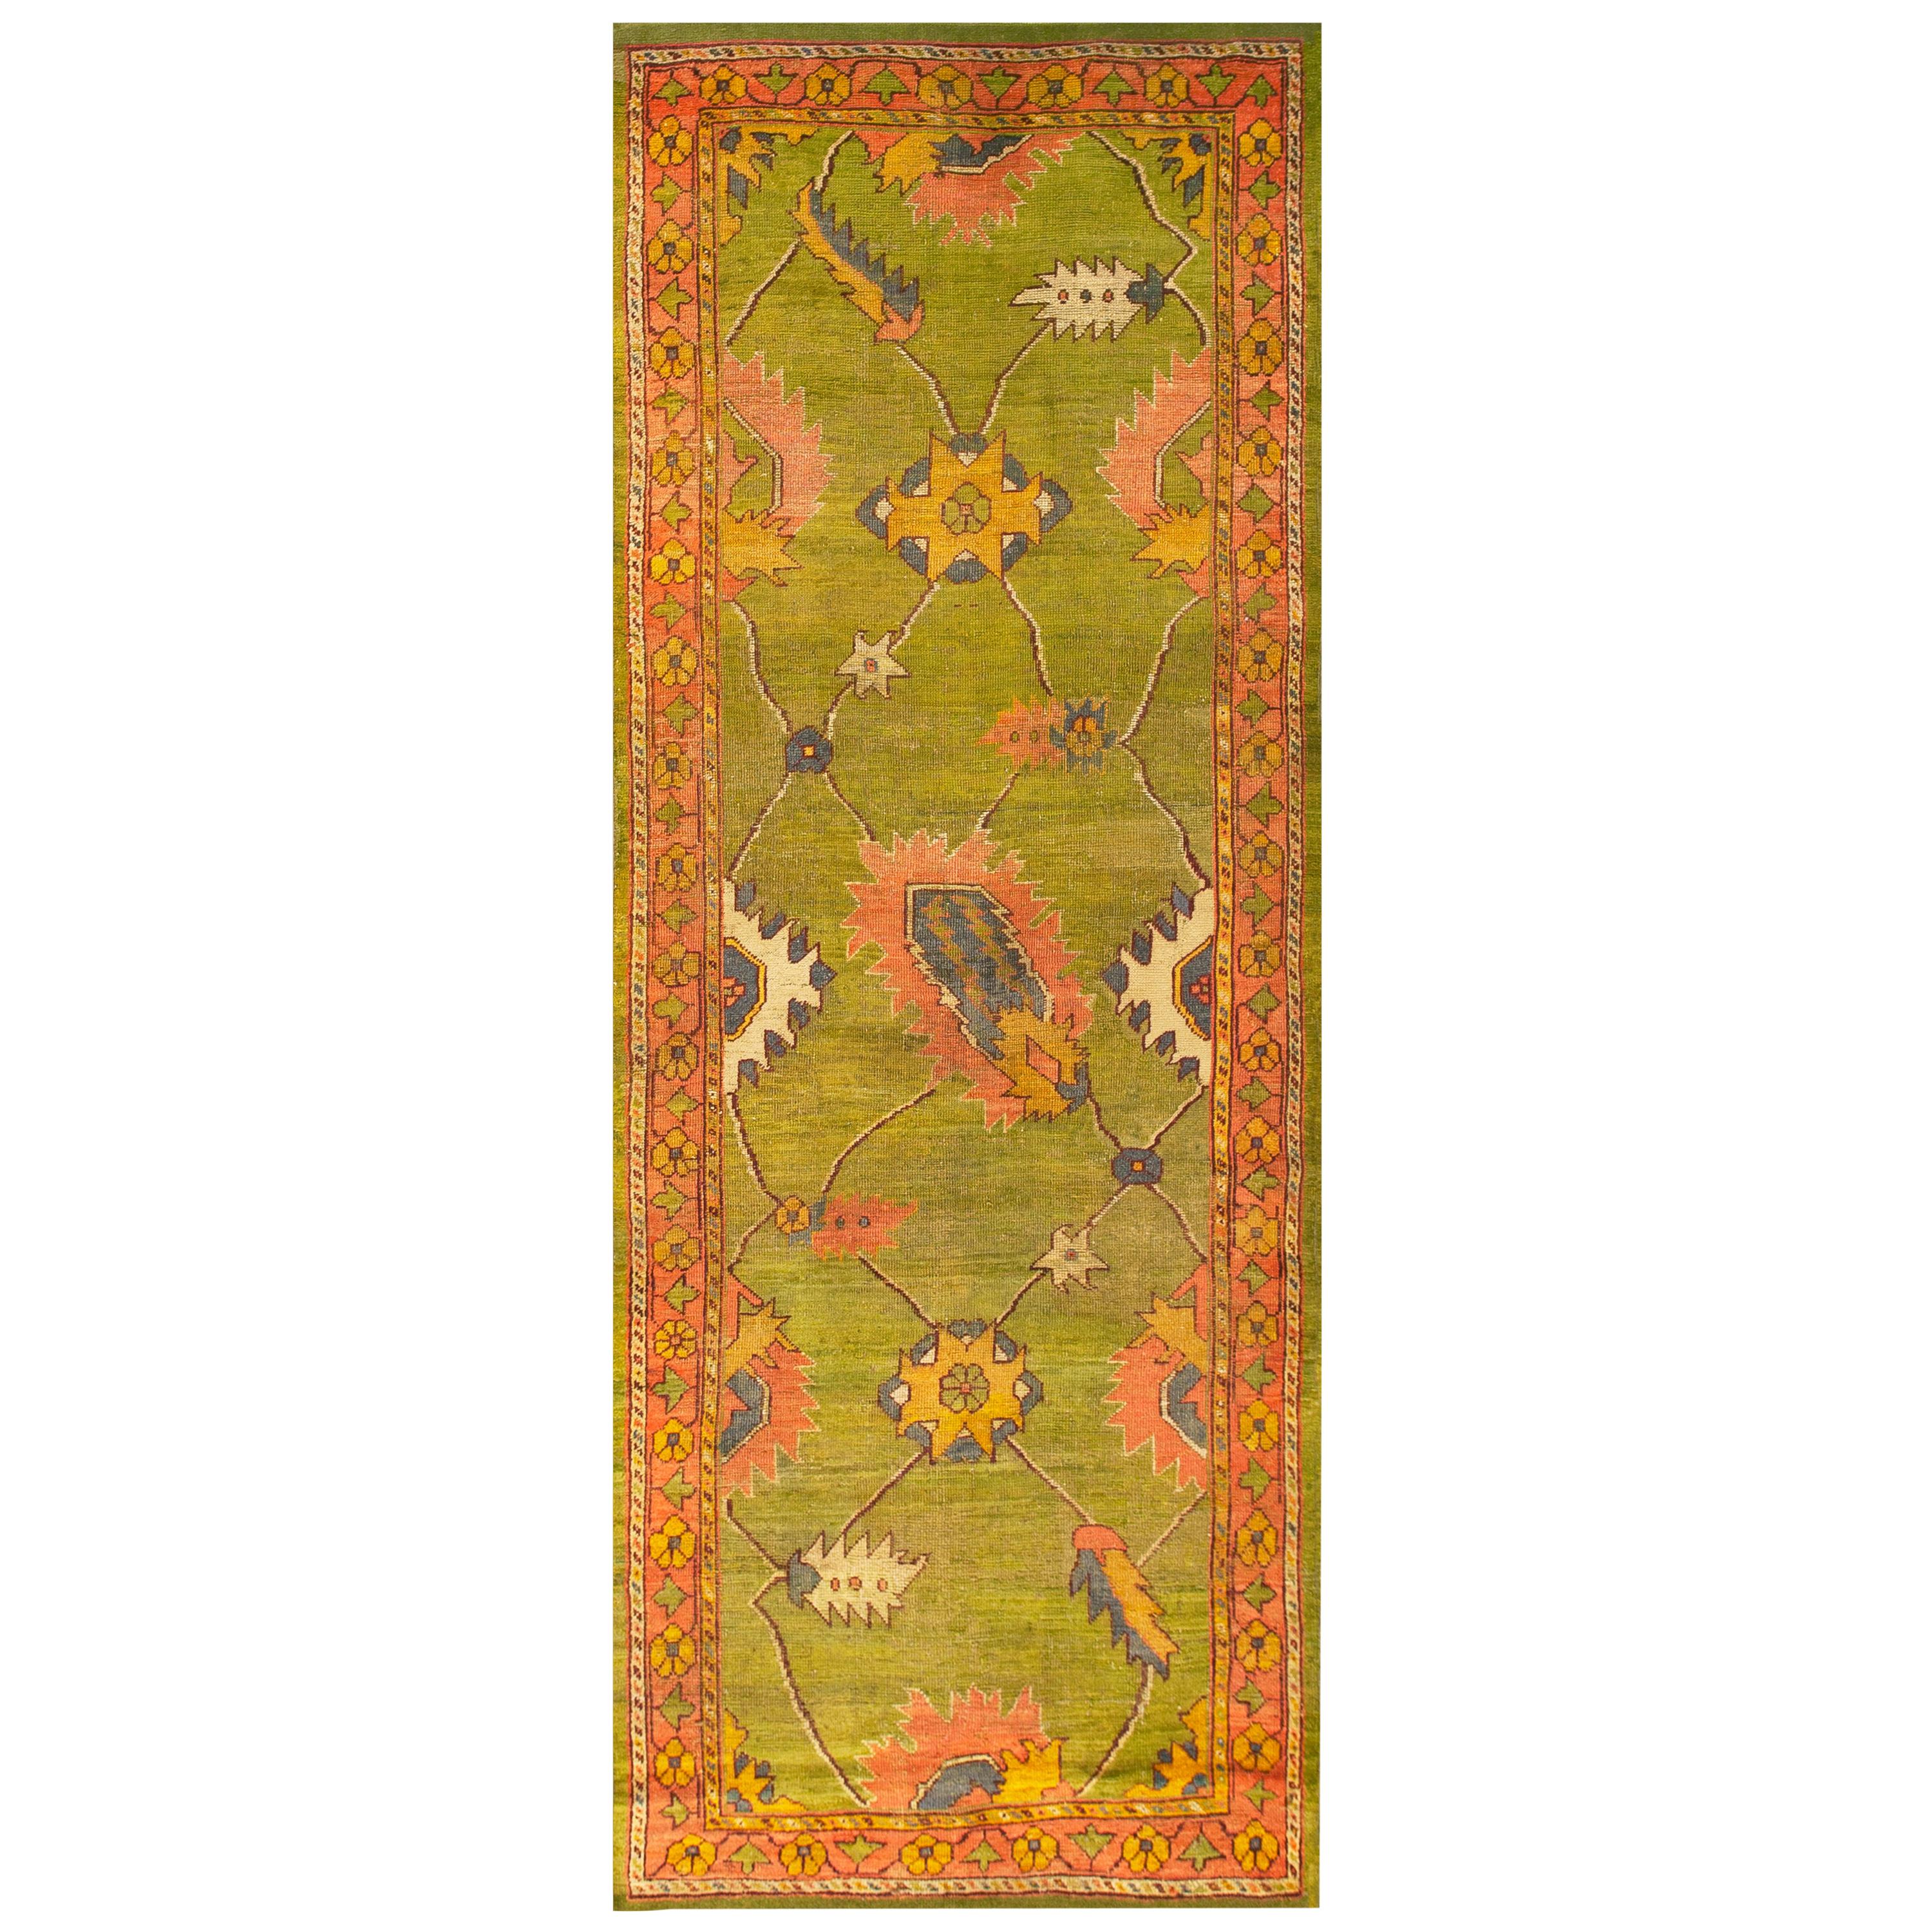 Late 19th Century Turkish Oushak Carpet ( 4'4" x 11'6" - 132 x 350 ) For Sale